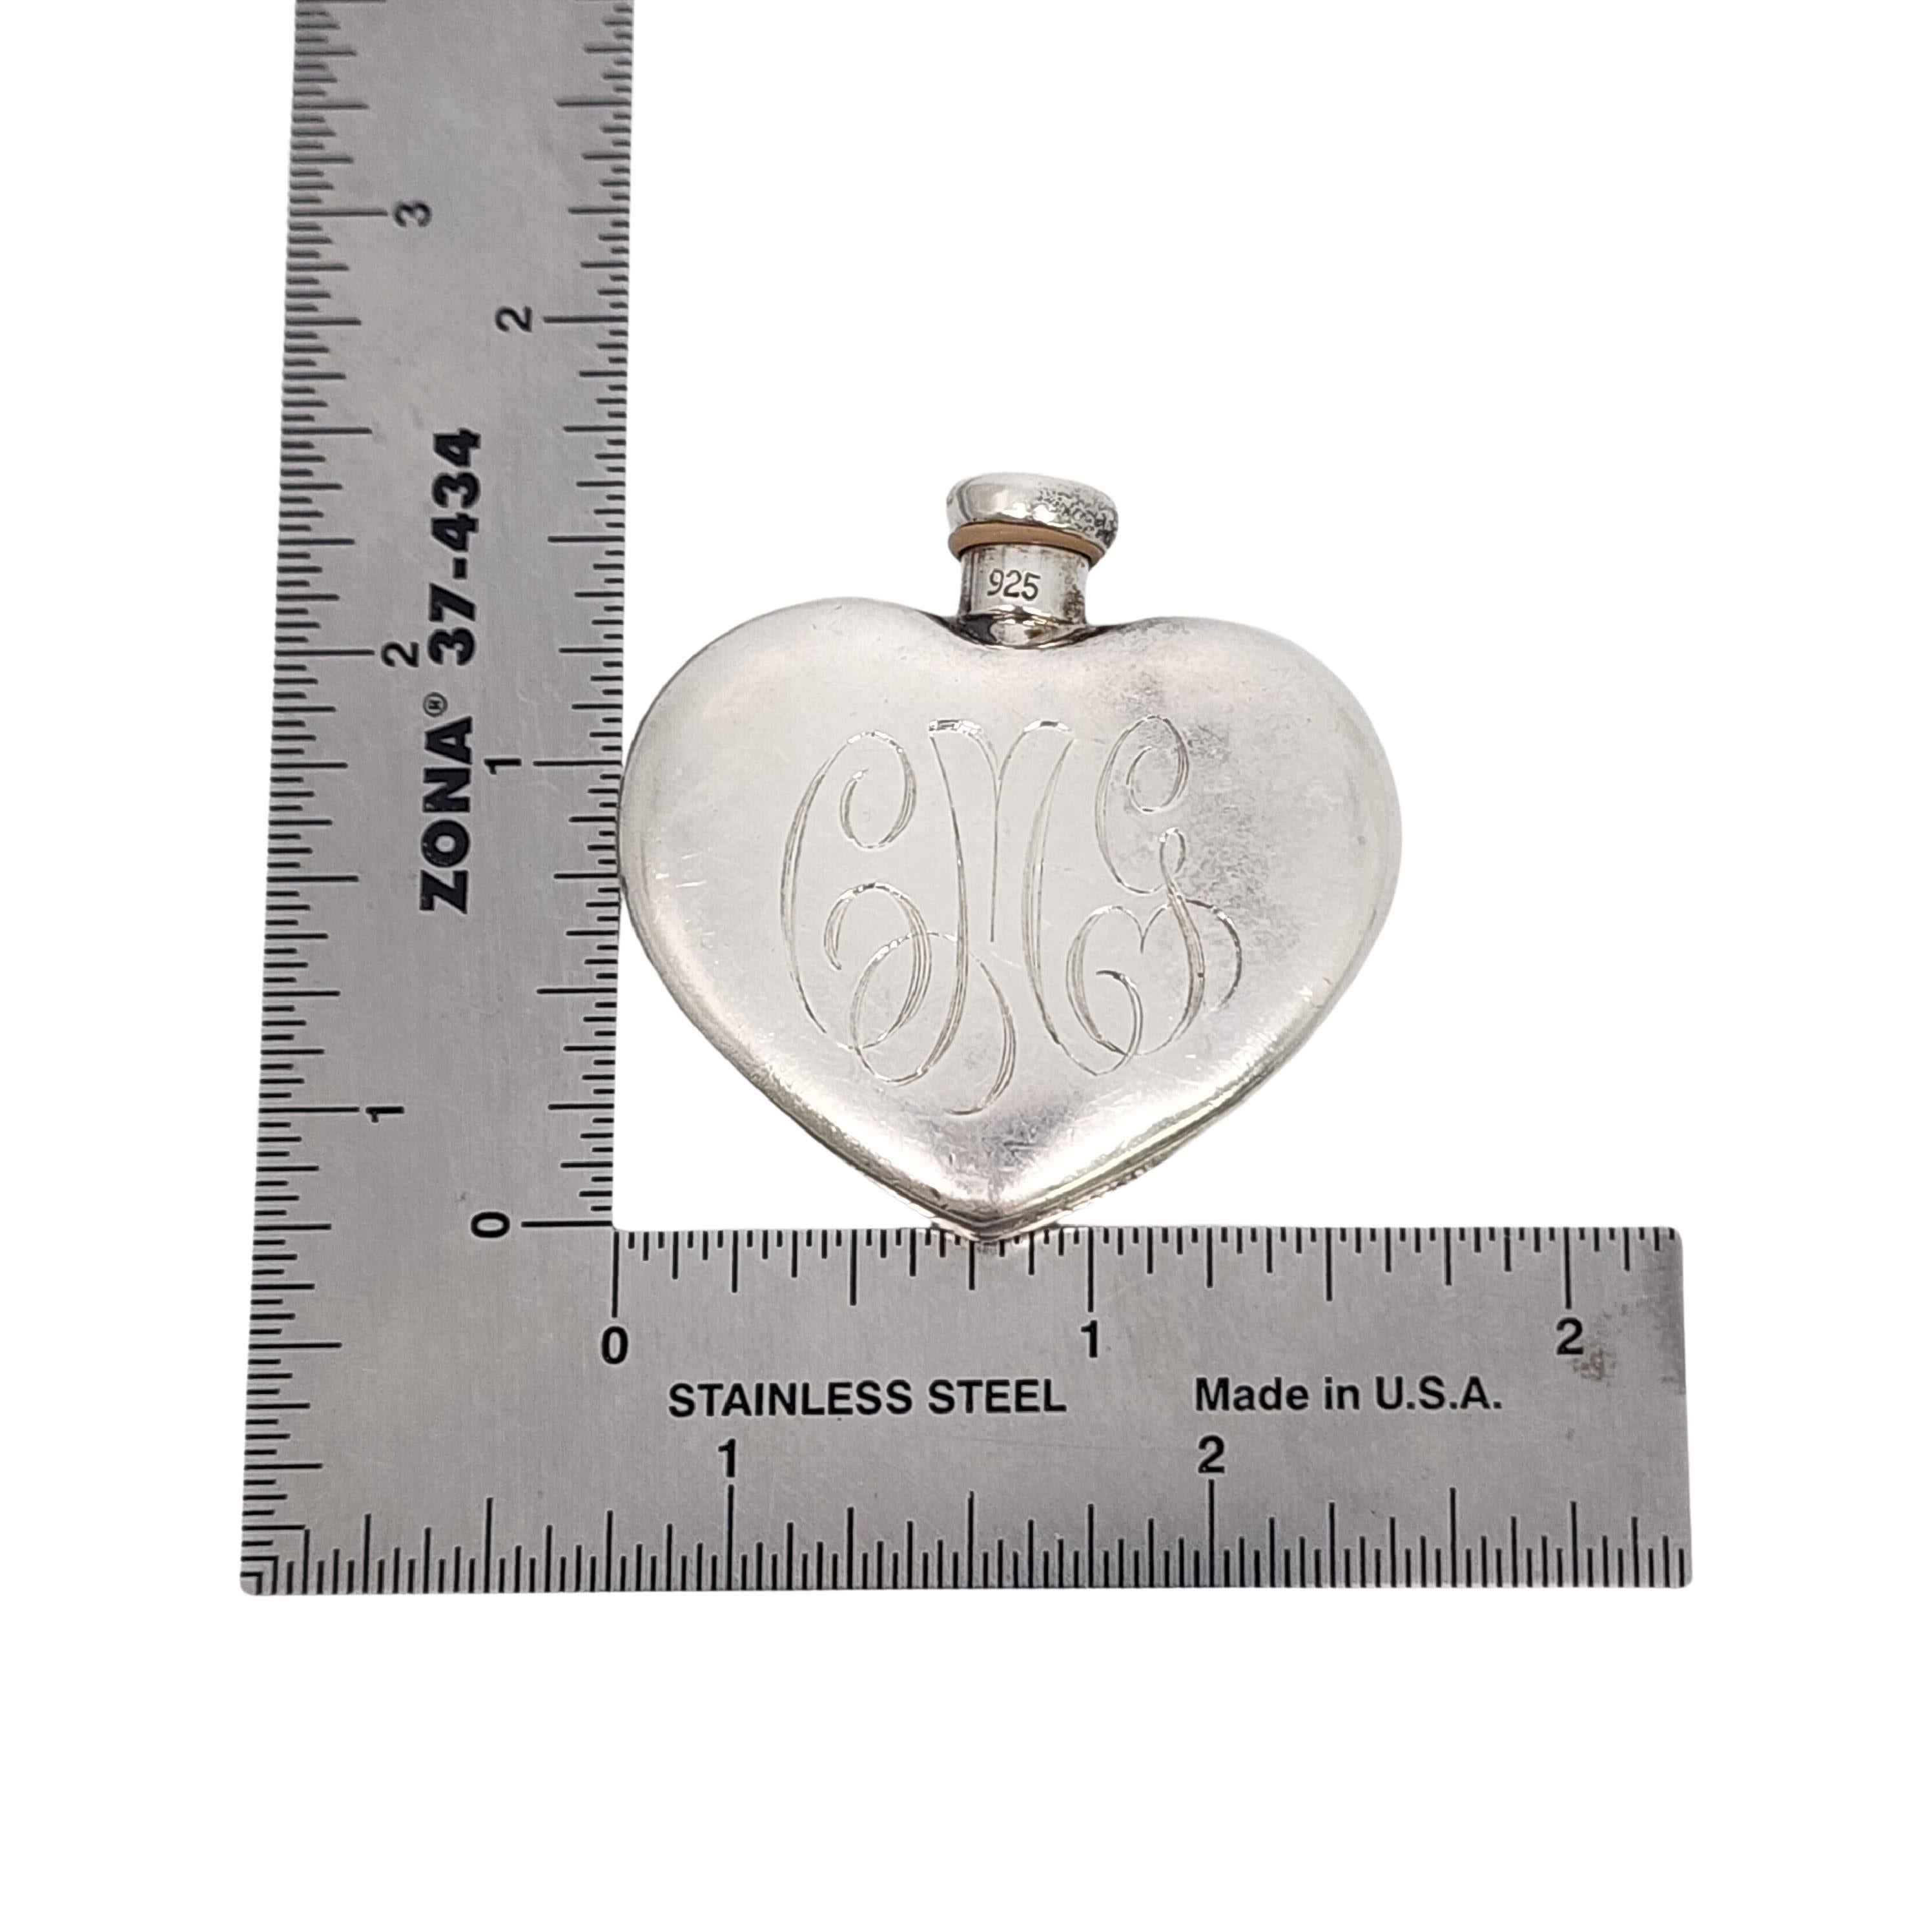 Tiffany & Co Sterling Silver Heart Perfume Bottle w/Monogram #17267 For Sale 5